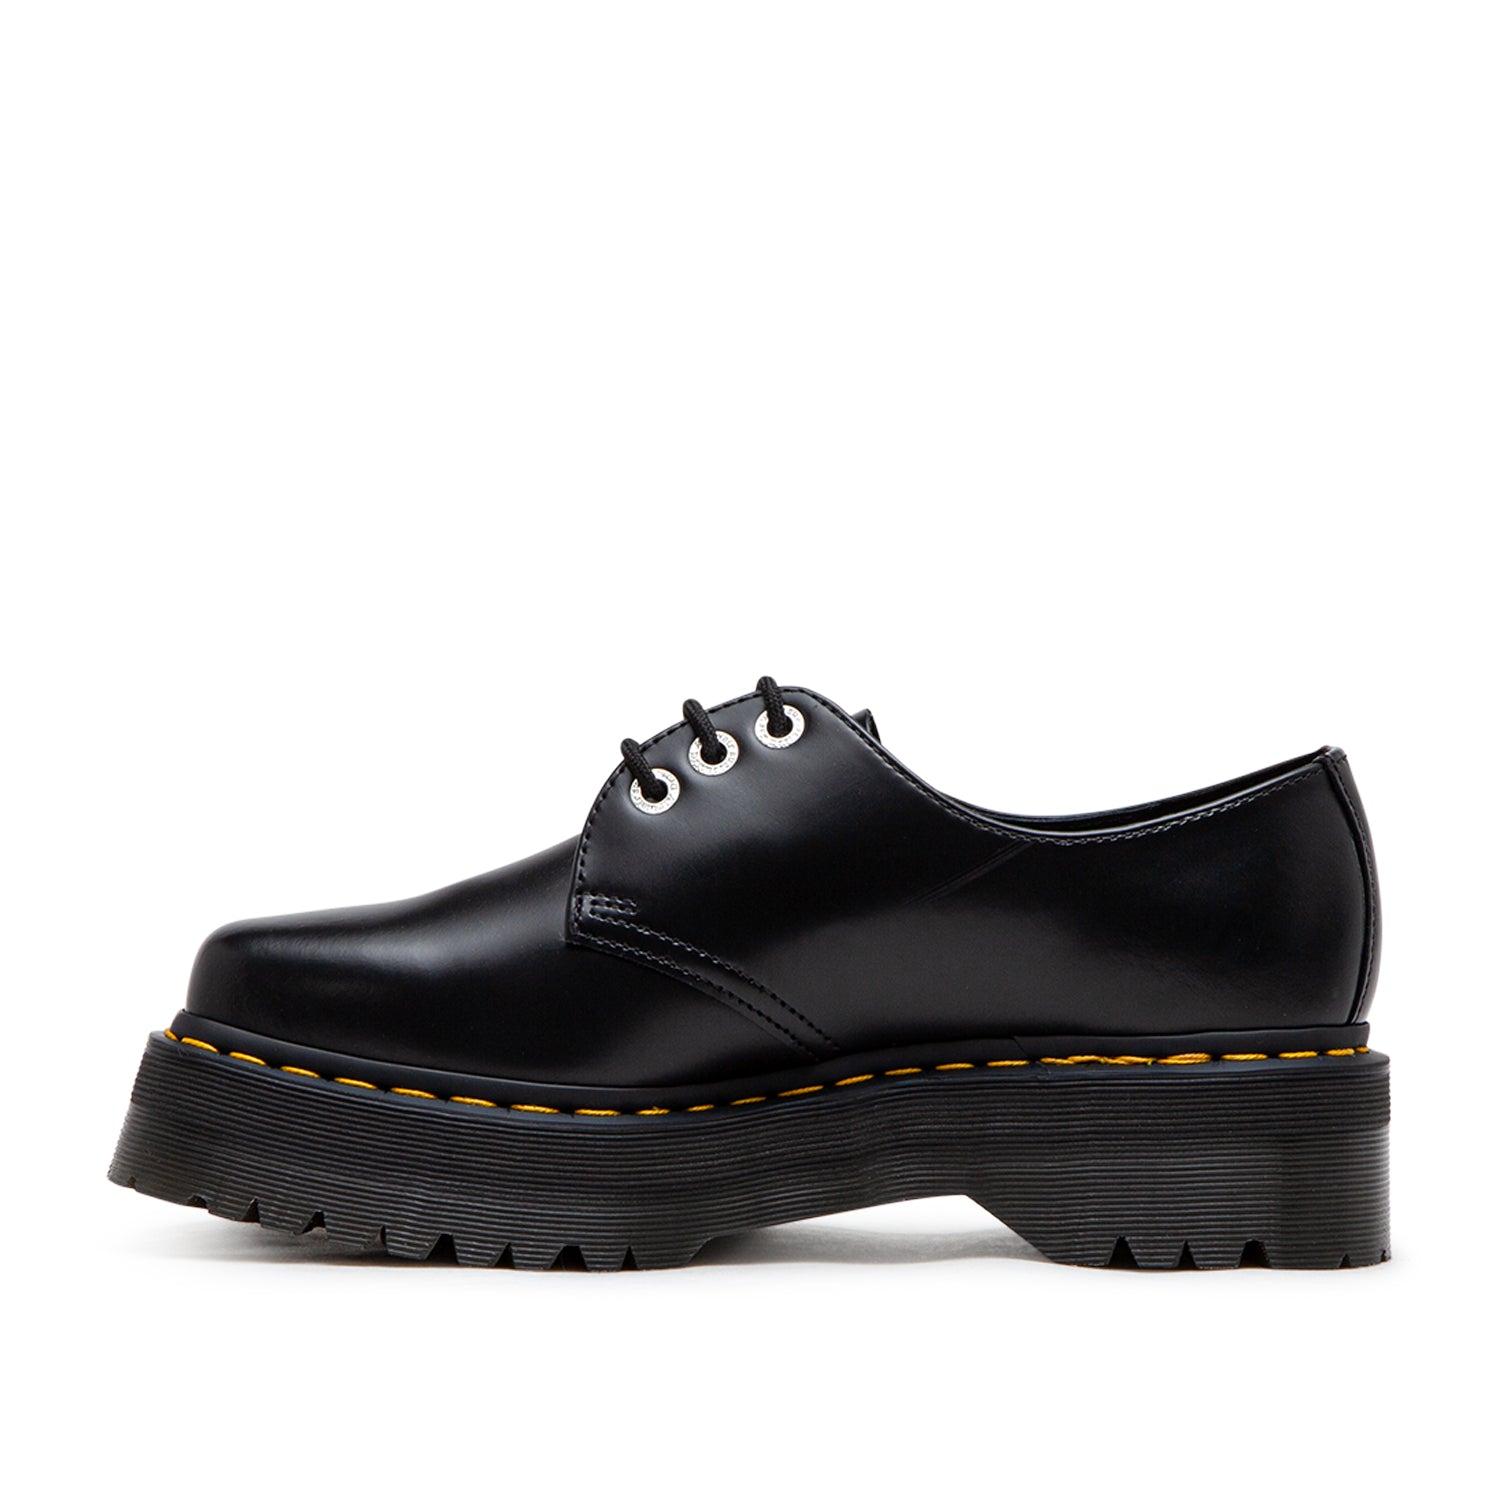 Dr. Martens 1461 Quad Squared Toe Leather Shoes (Schwarz)  - Allike Store